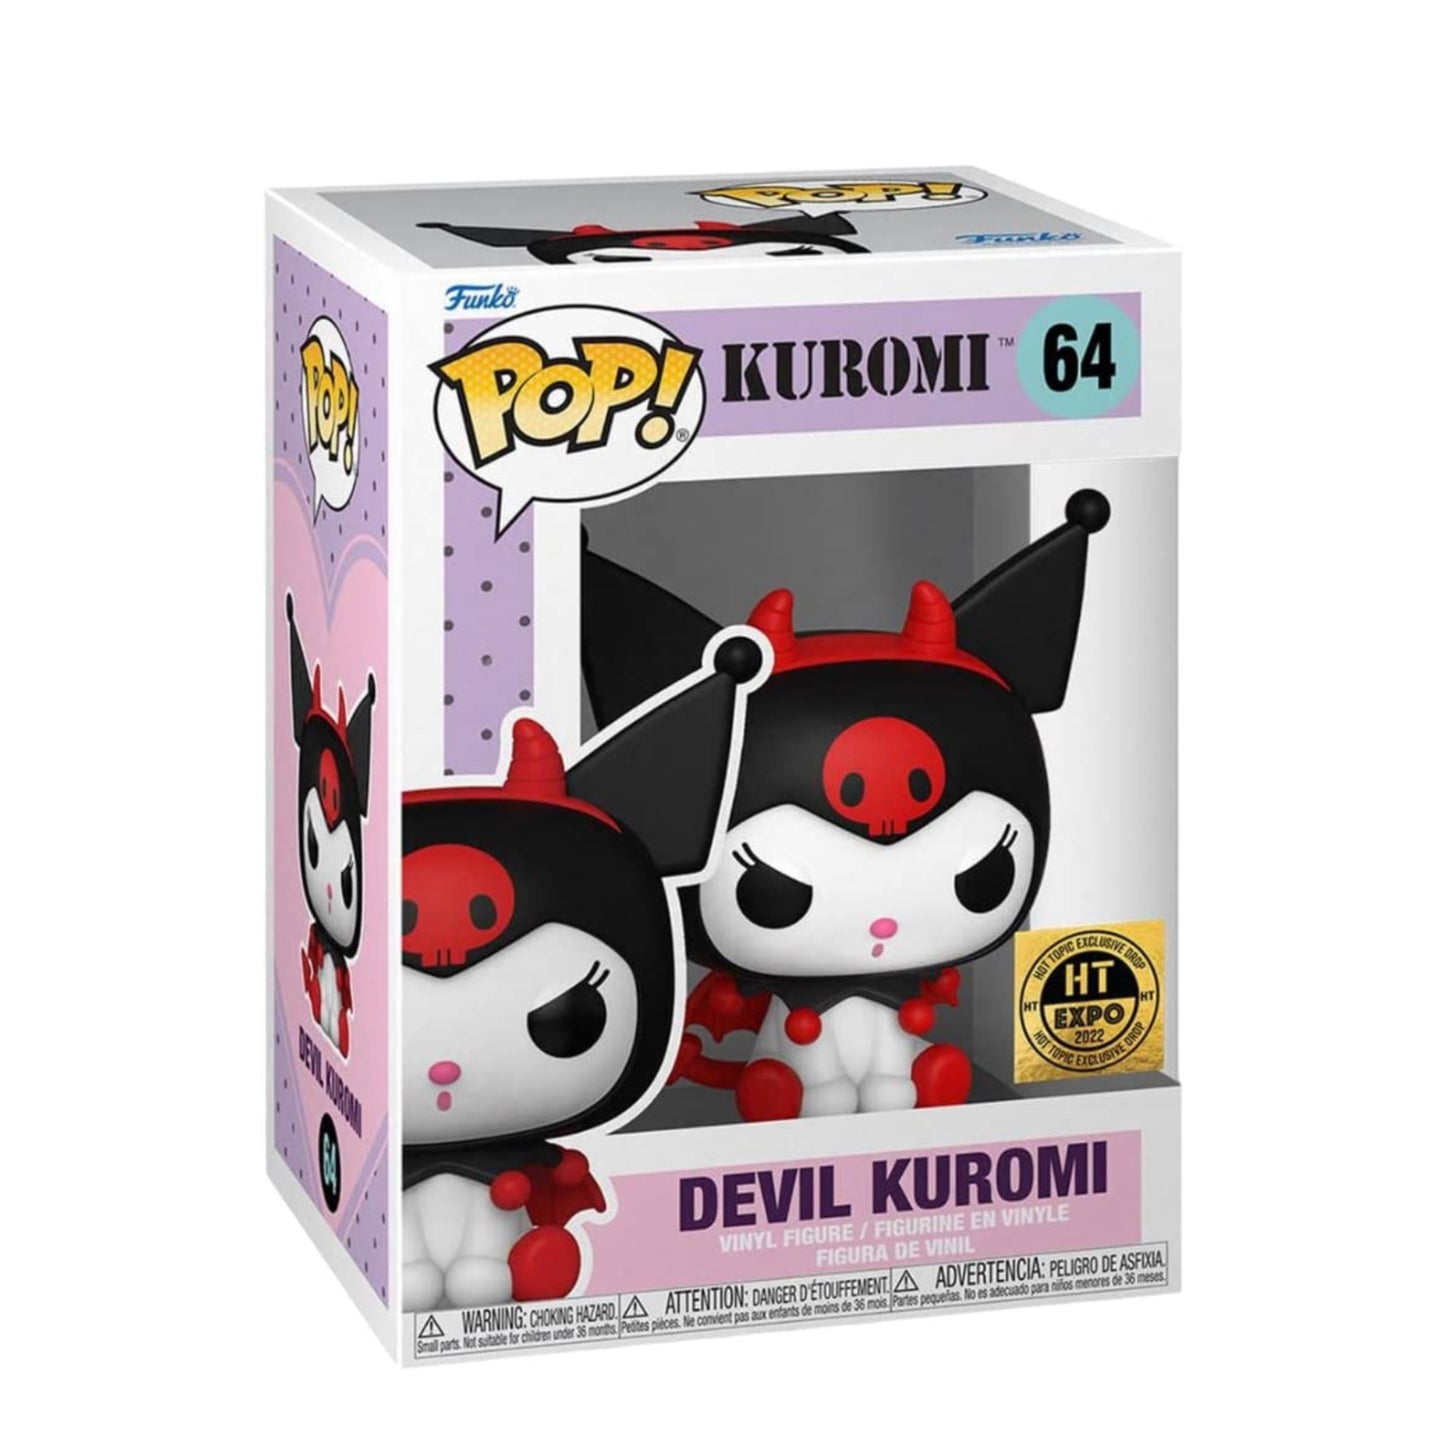 Funko Pop! Kuromi (Devil) Exclusivo Hot Topic